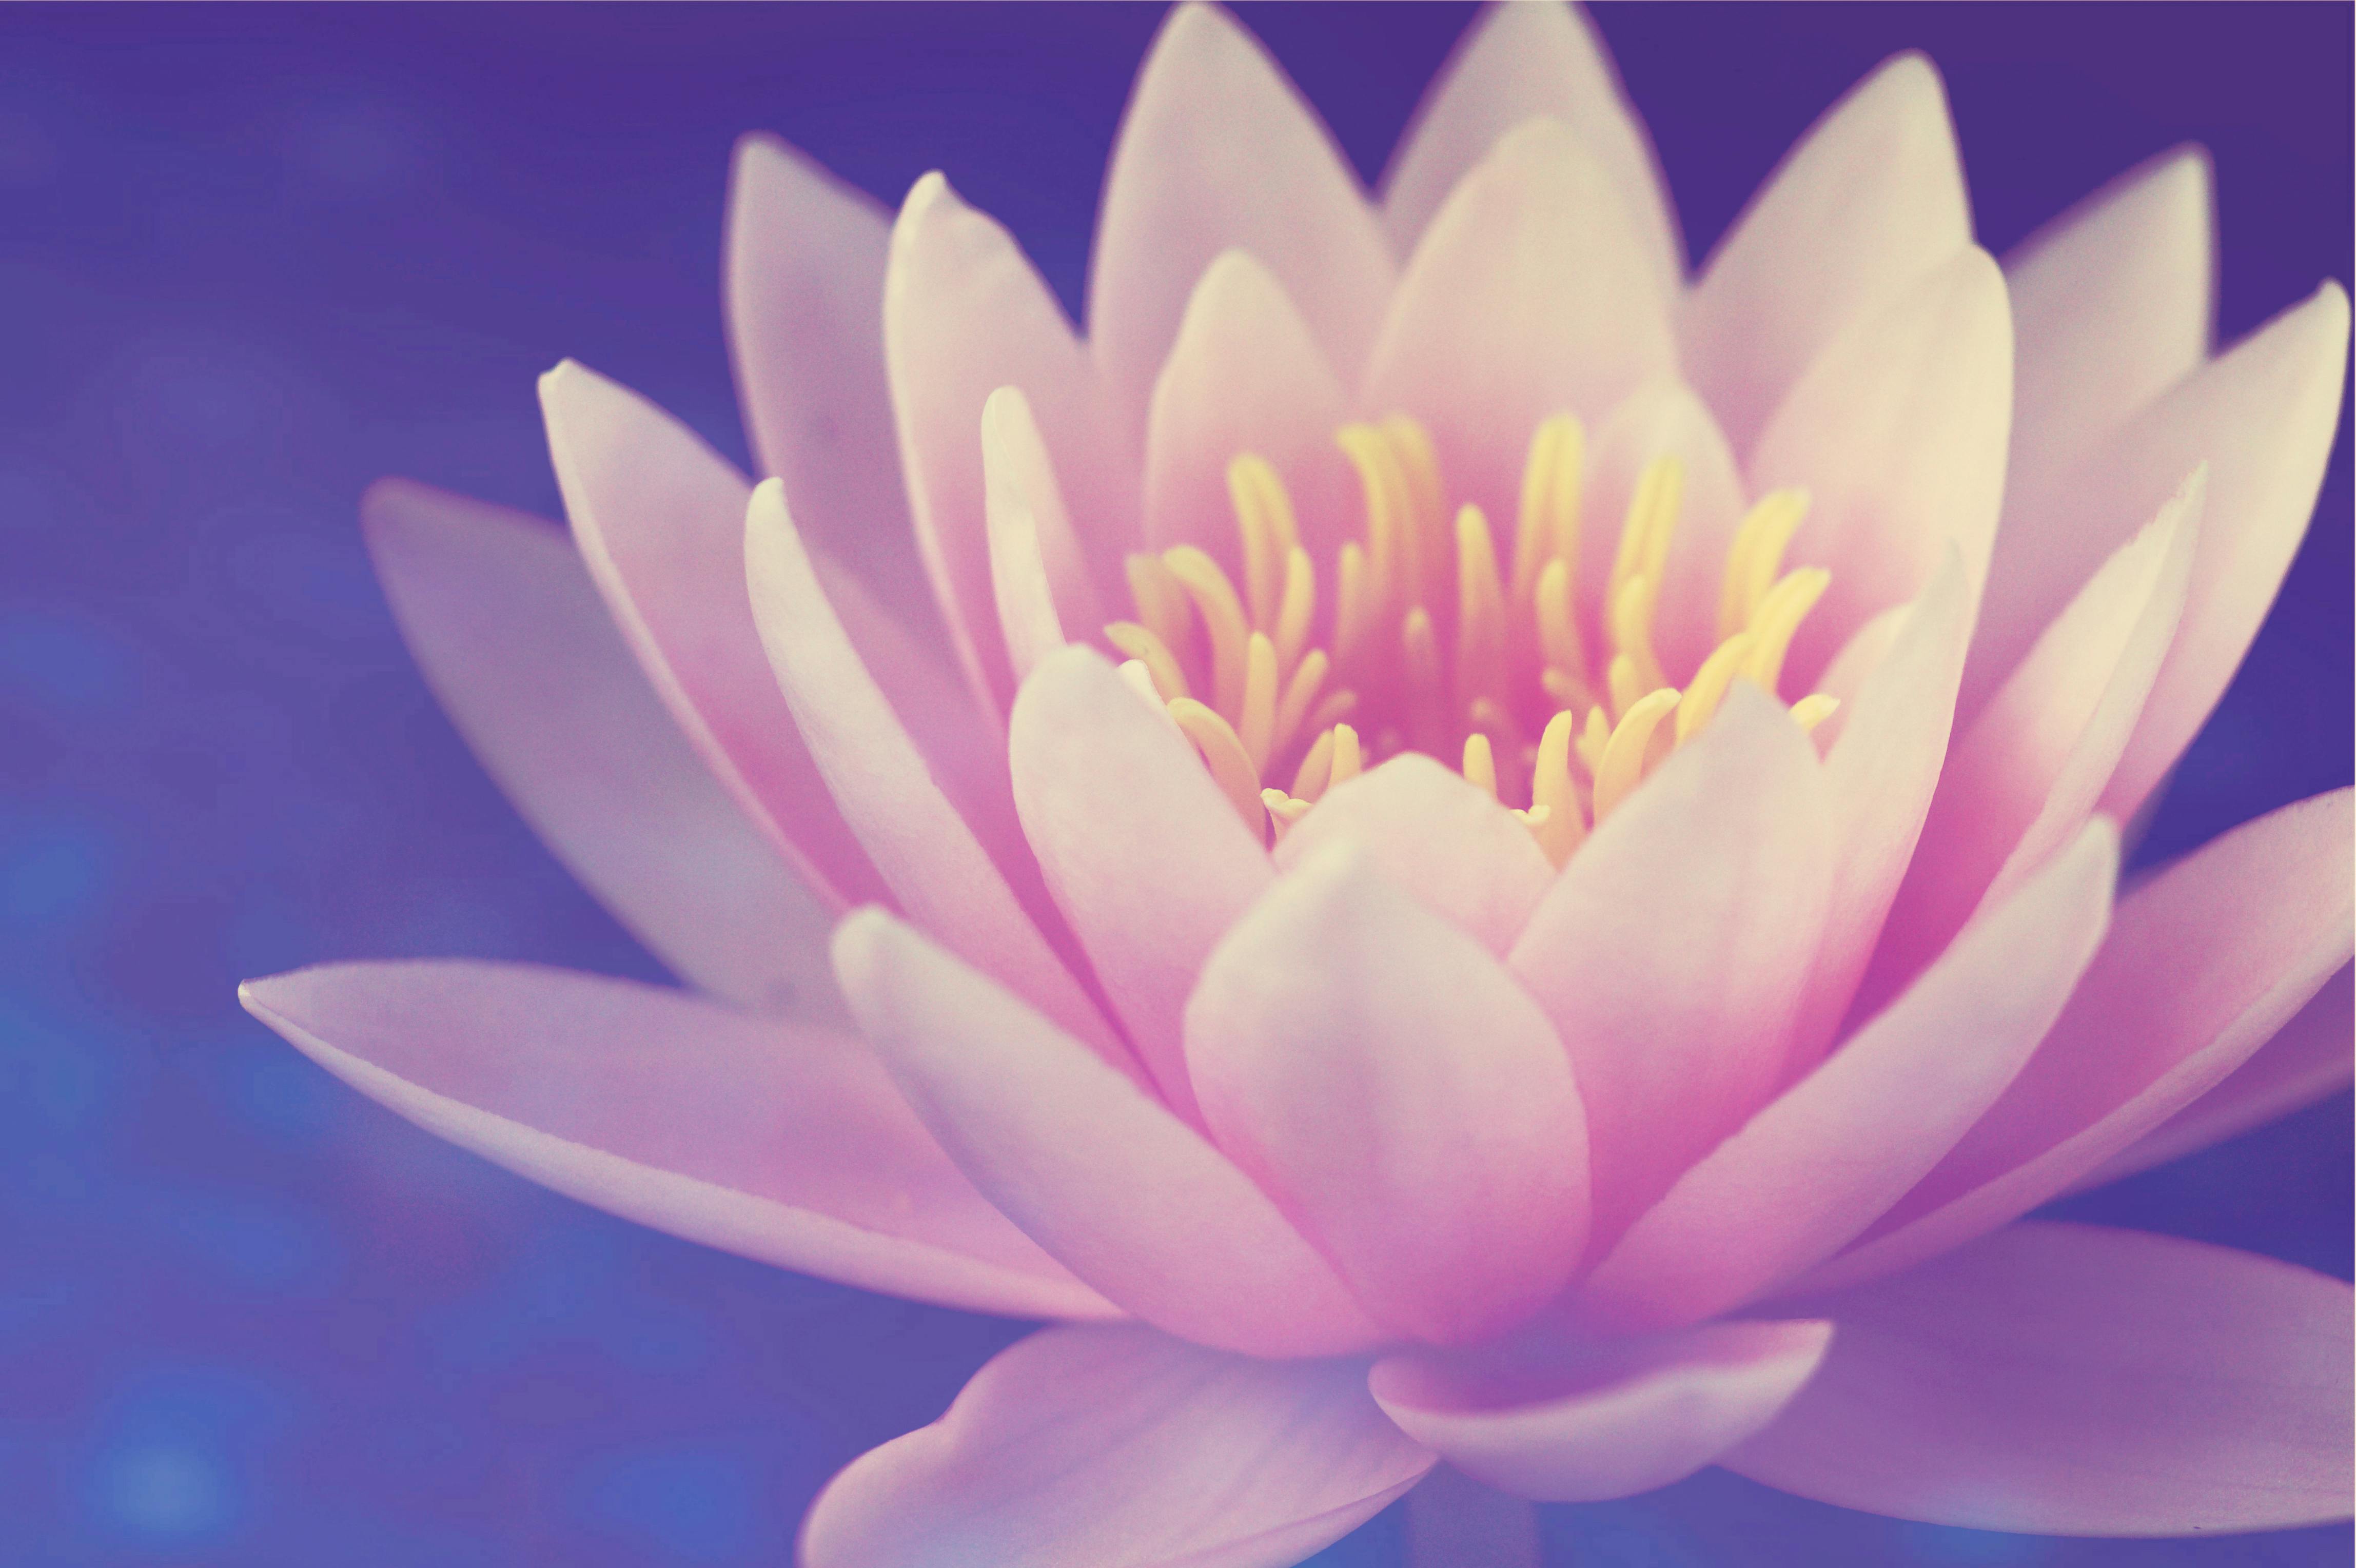 Wallpaper pink lotus, flower, bloom desktop wallpaper, hd image, picture,  background, ad5623 | wallpapersmug